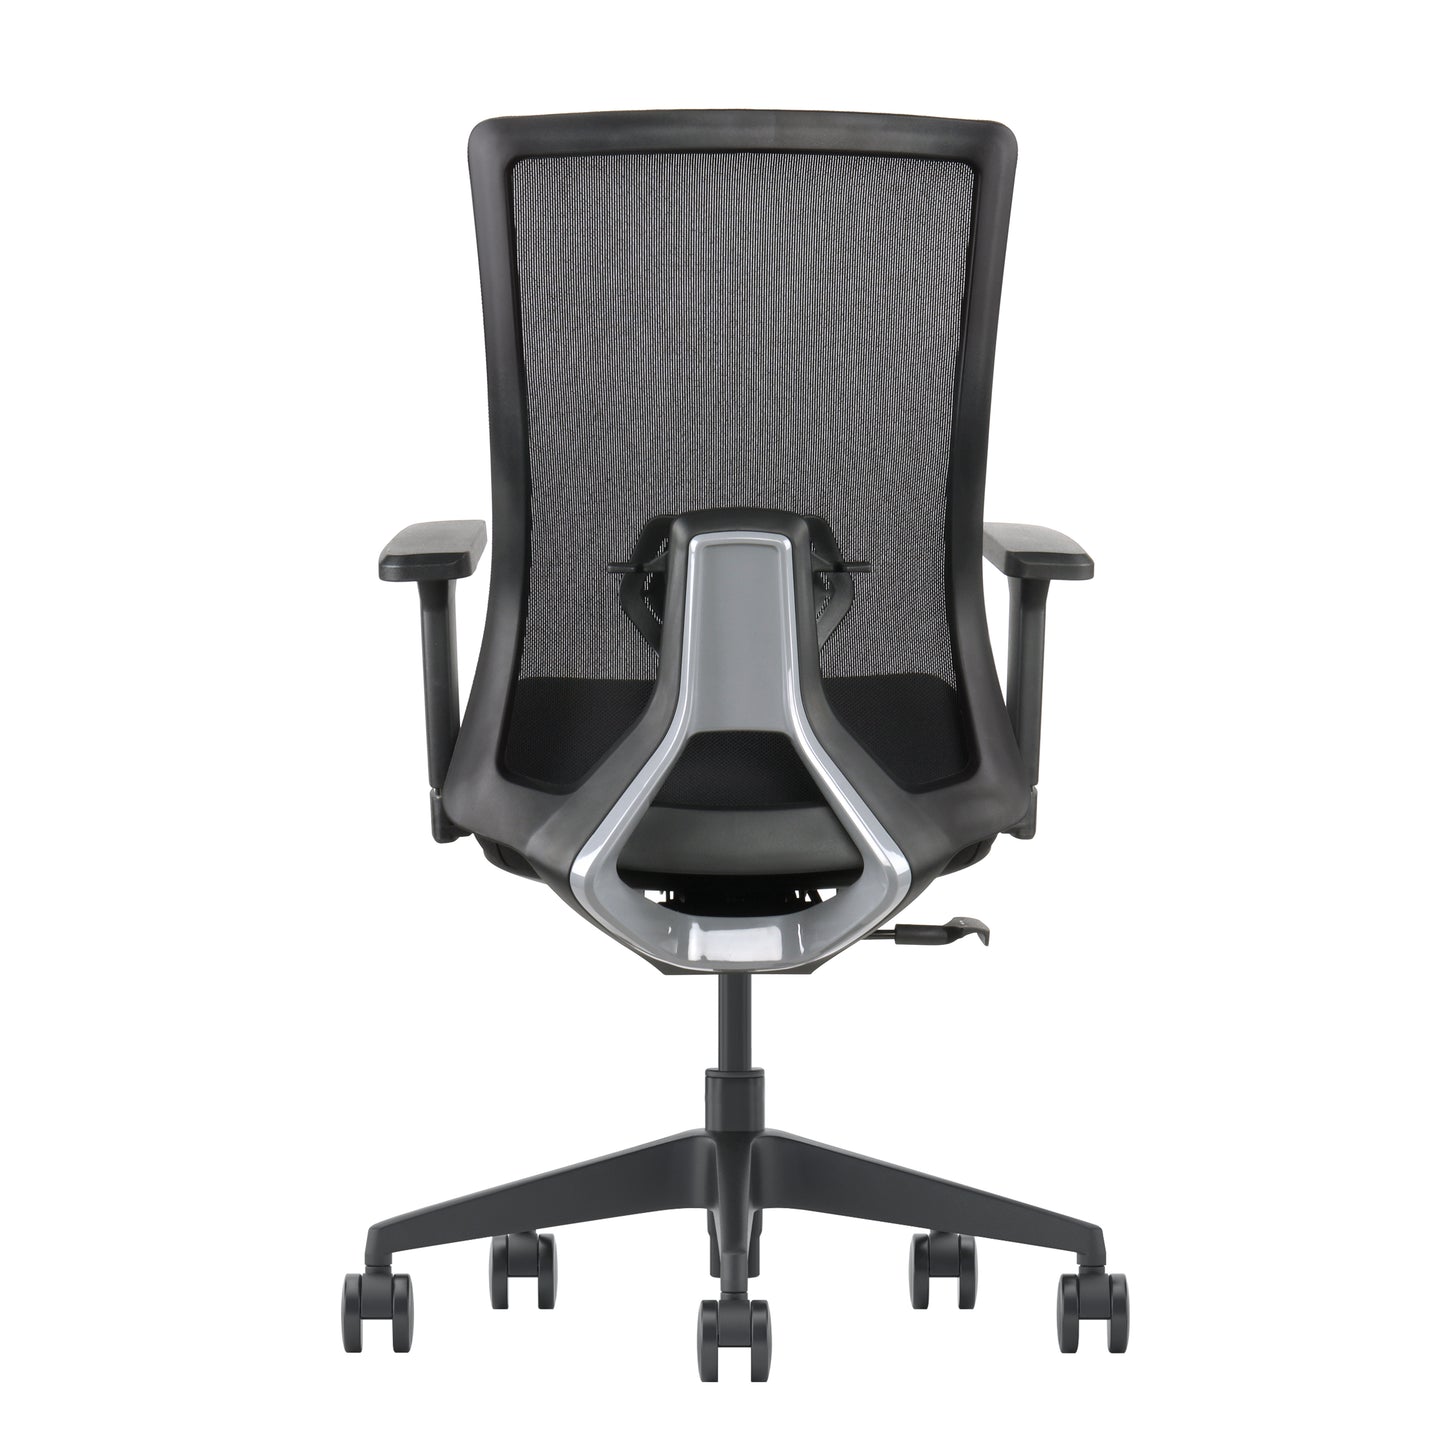 Stane Pro ergonomische bureaustoel - test-product-media-liquid1